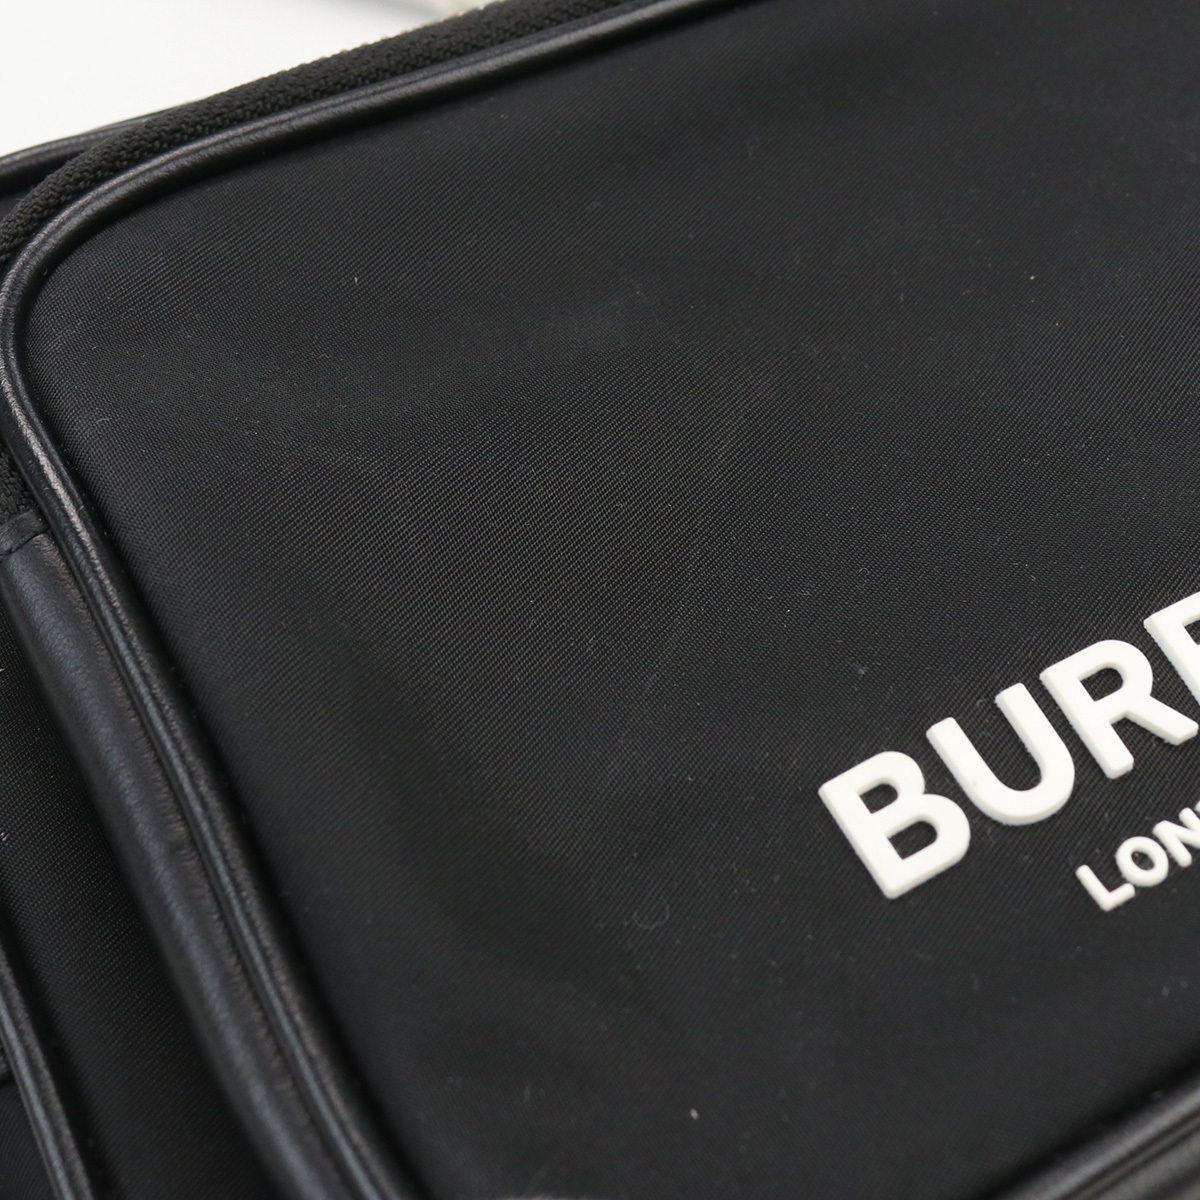  б/у хороший товар Burberry BURBERRY сумка на плечо бренд нейлон 8049094 A1189 разряд :A us-2 мужской 